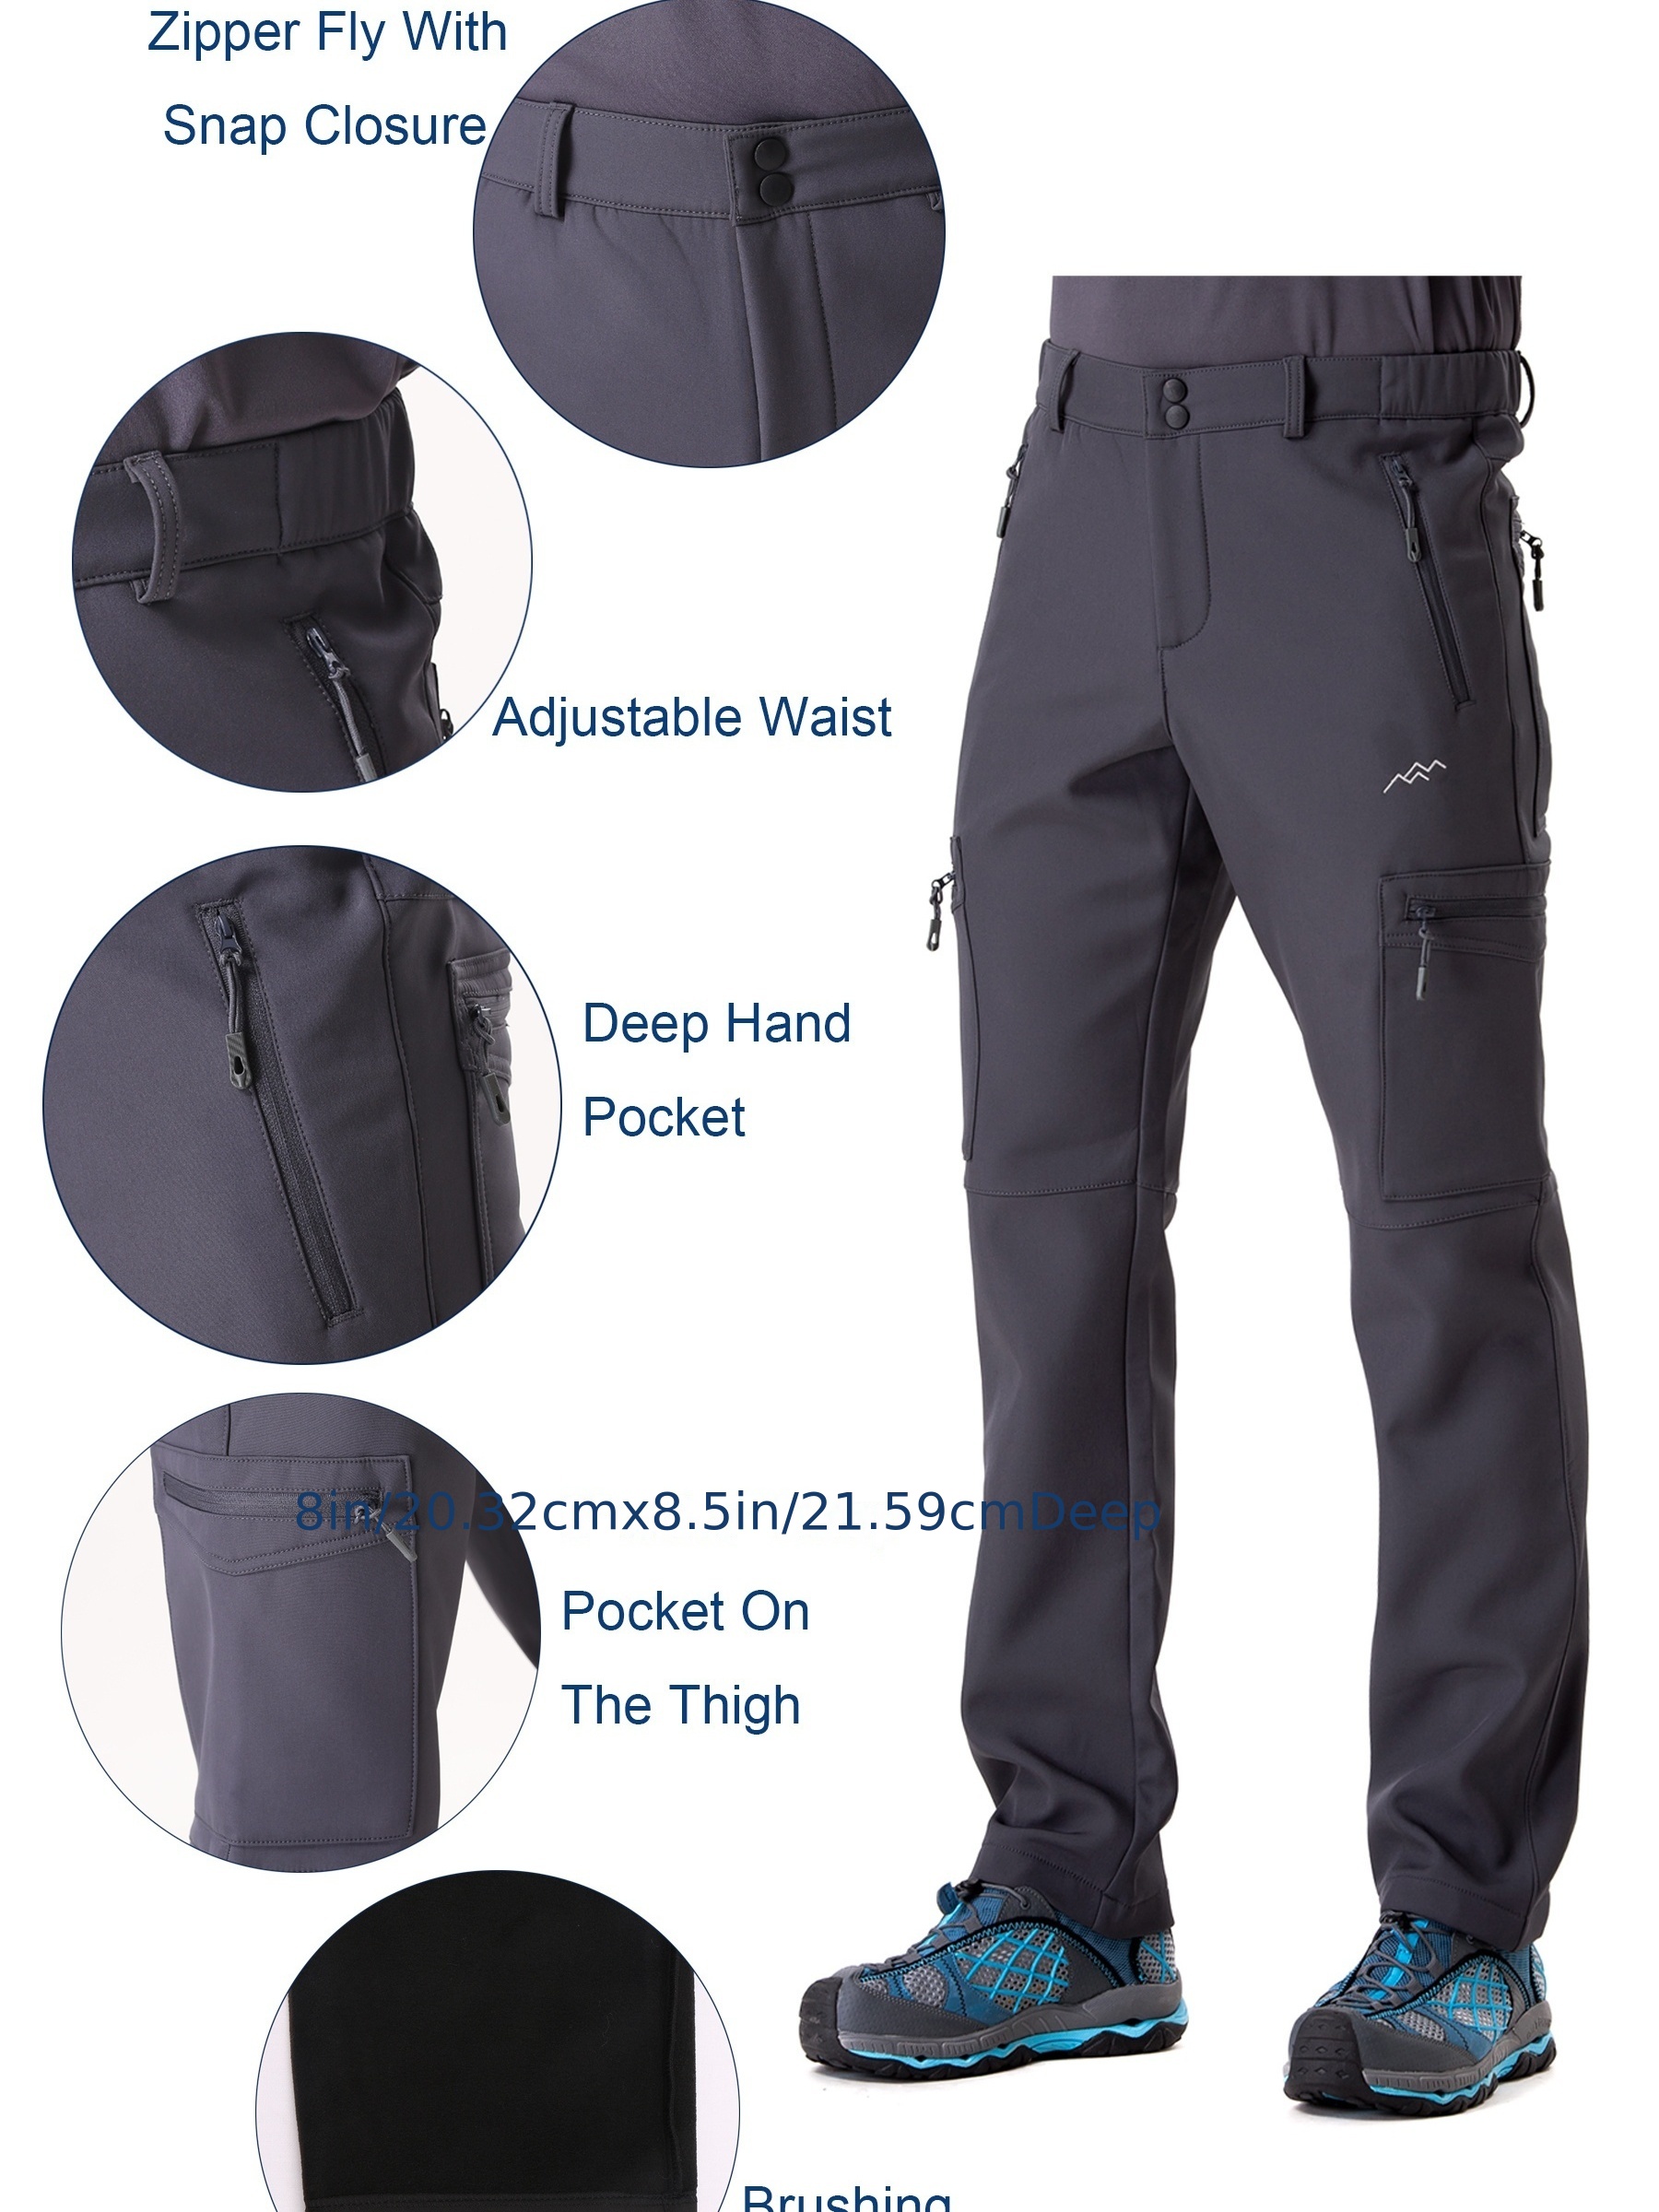 Pantete - Pantalones térmicos impermeables para hombre con aislamiento  térmico para senderismo, esquí casual